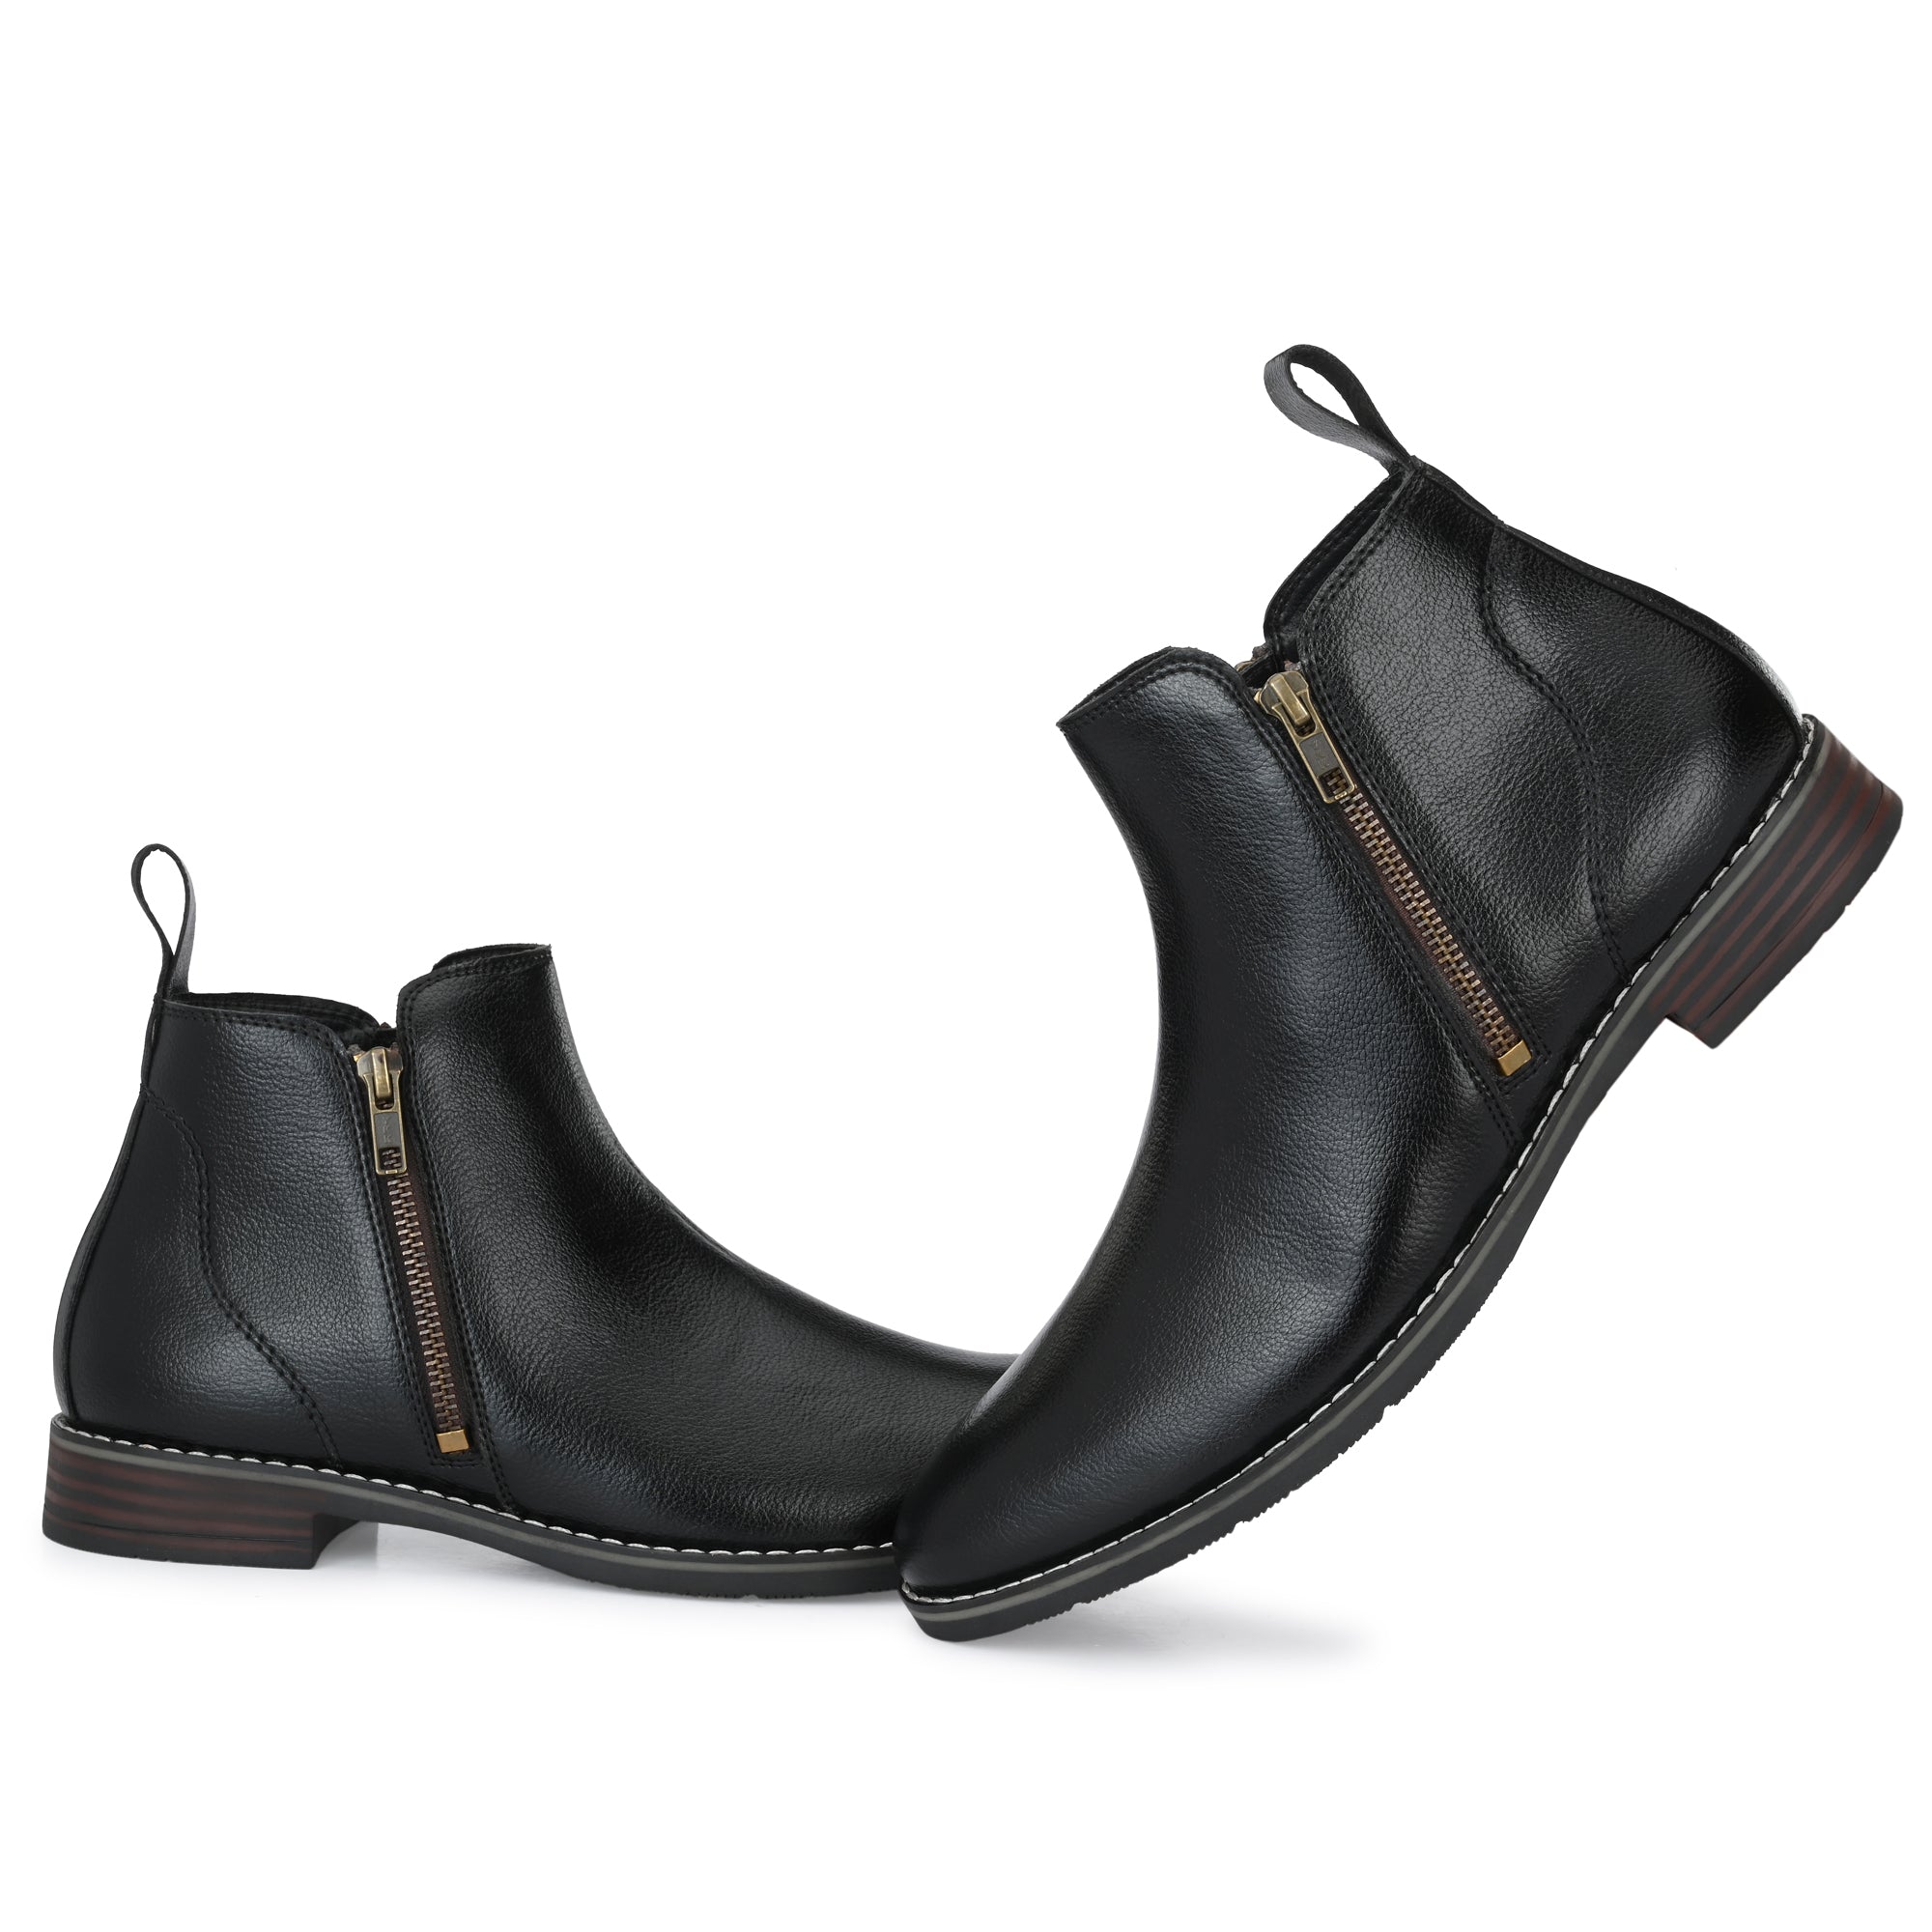 Attitudist Black Ankle Boot Both Zip For Men - ATTITUDIST